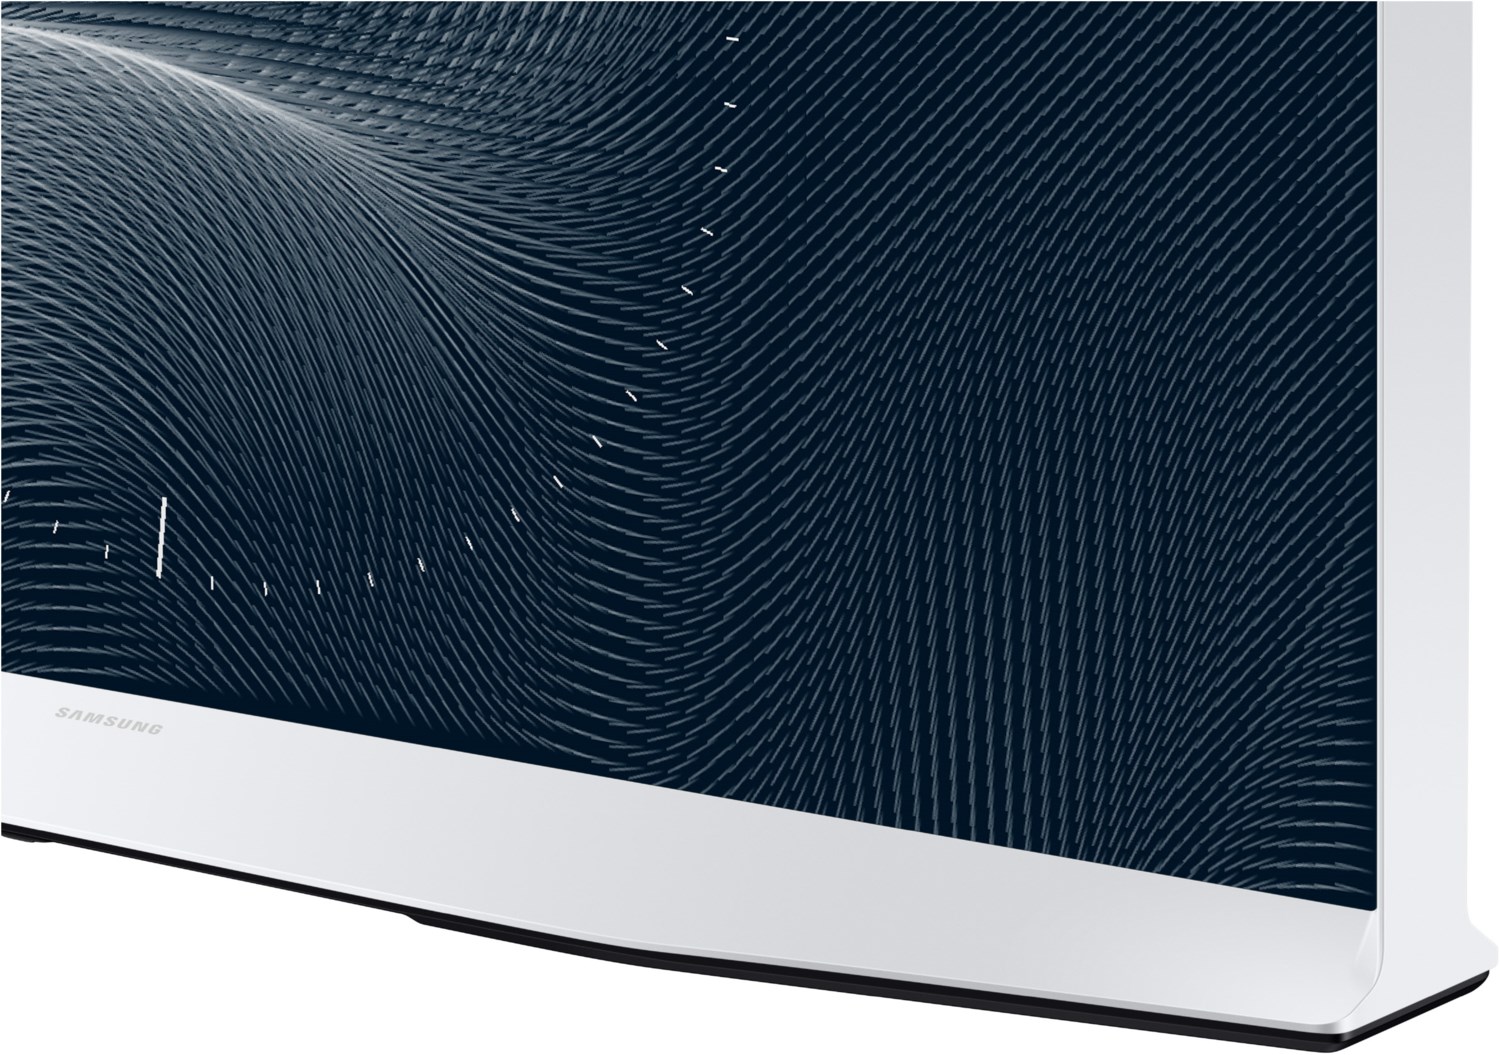 Samsung The Serif QLED-TV 65 Zoll (163 cm) Cloud White